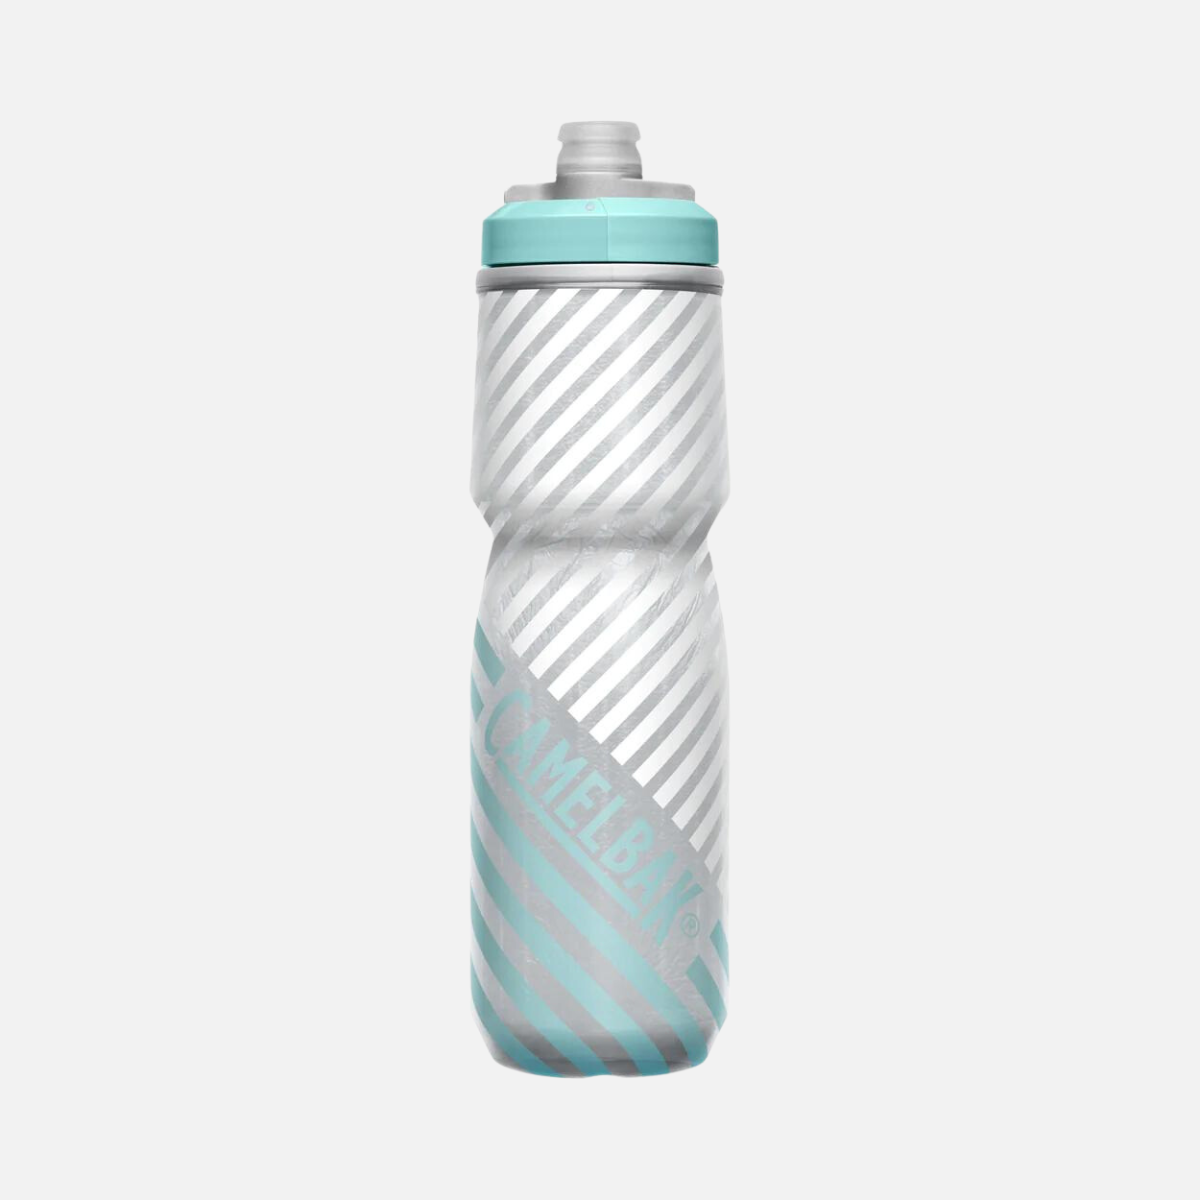 Camelbak Podium Chill bottle 710ml -Coral Stripes/Navy Stripes/Lime/Blue Stripes/Grey/Teal Stripes/